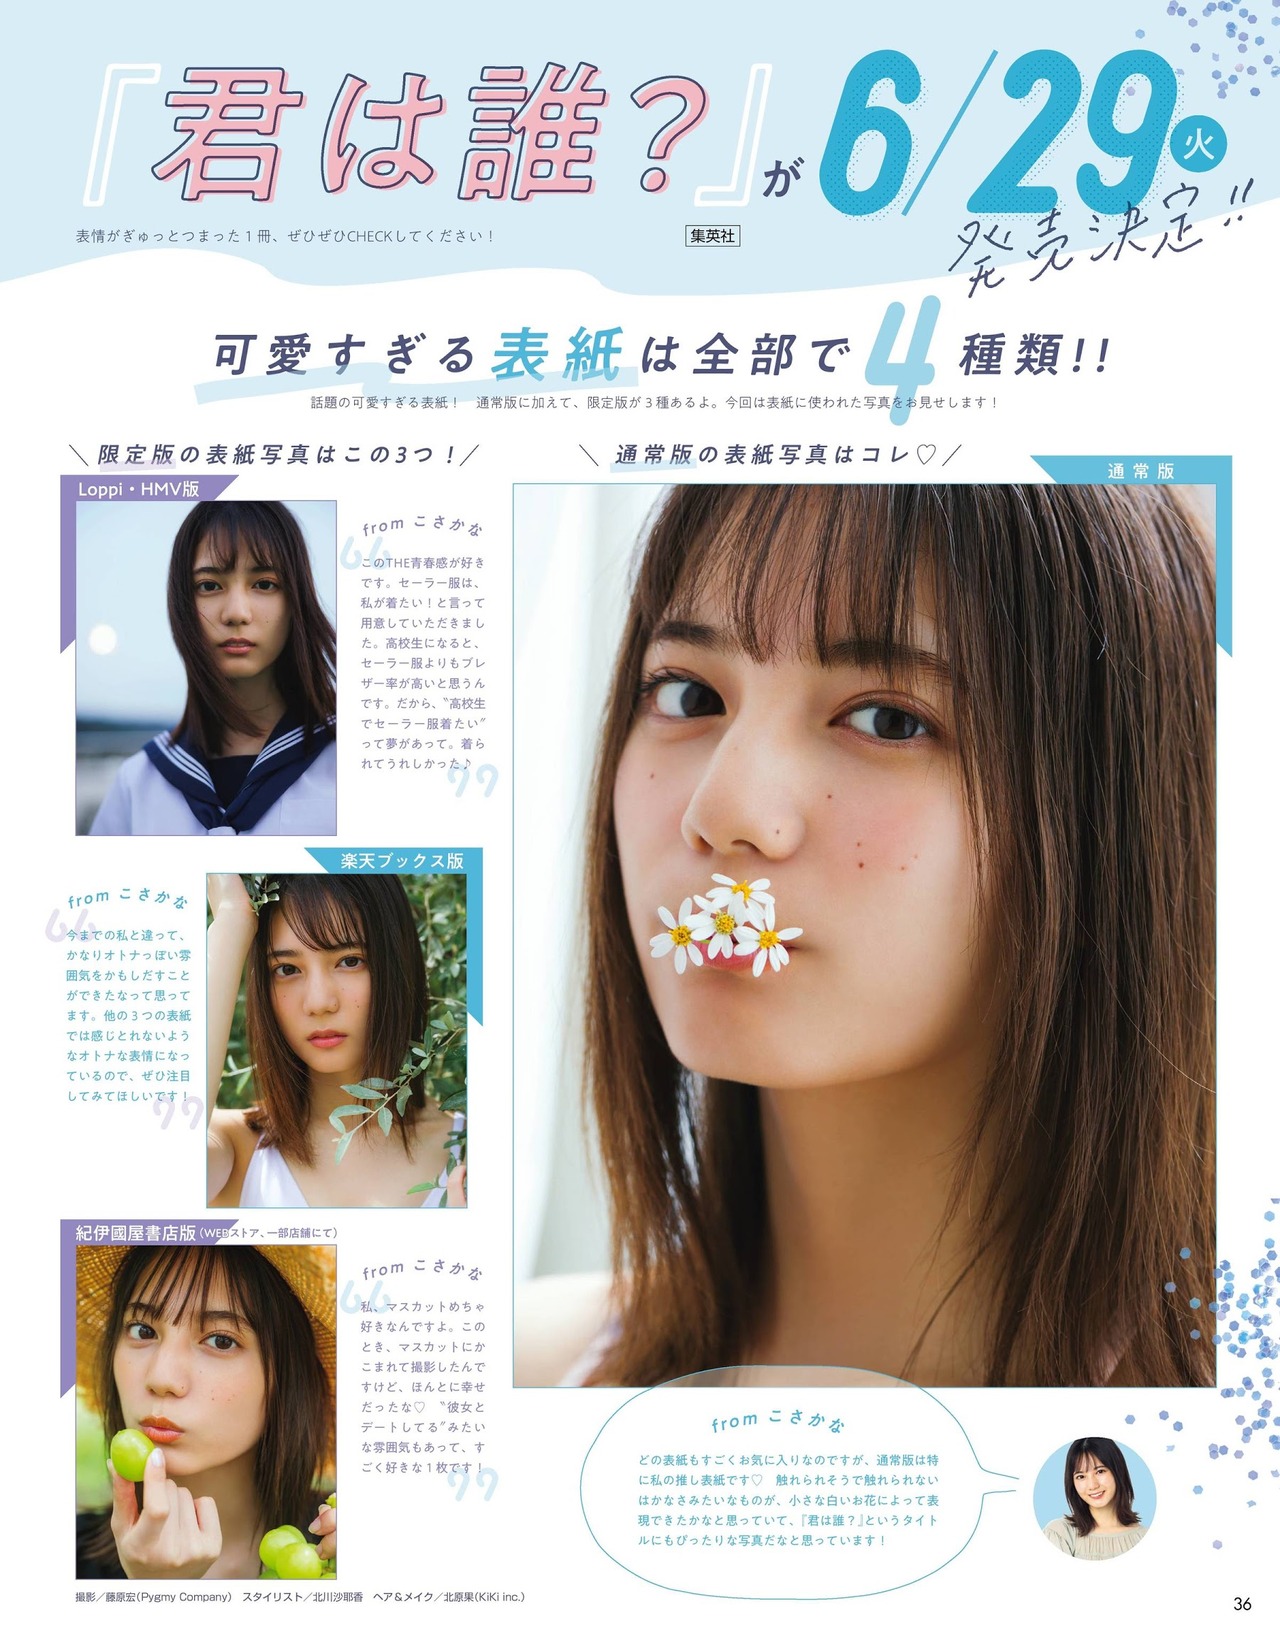 Nao Kosaka 小坂菜緒, Seventeen Magazine 2021.07